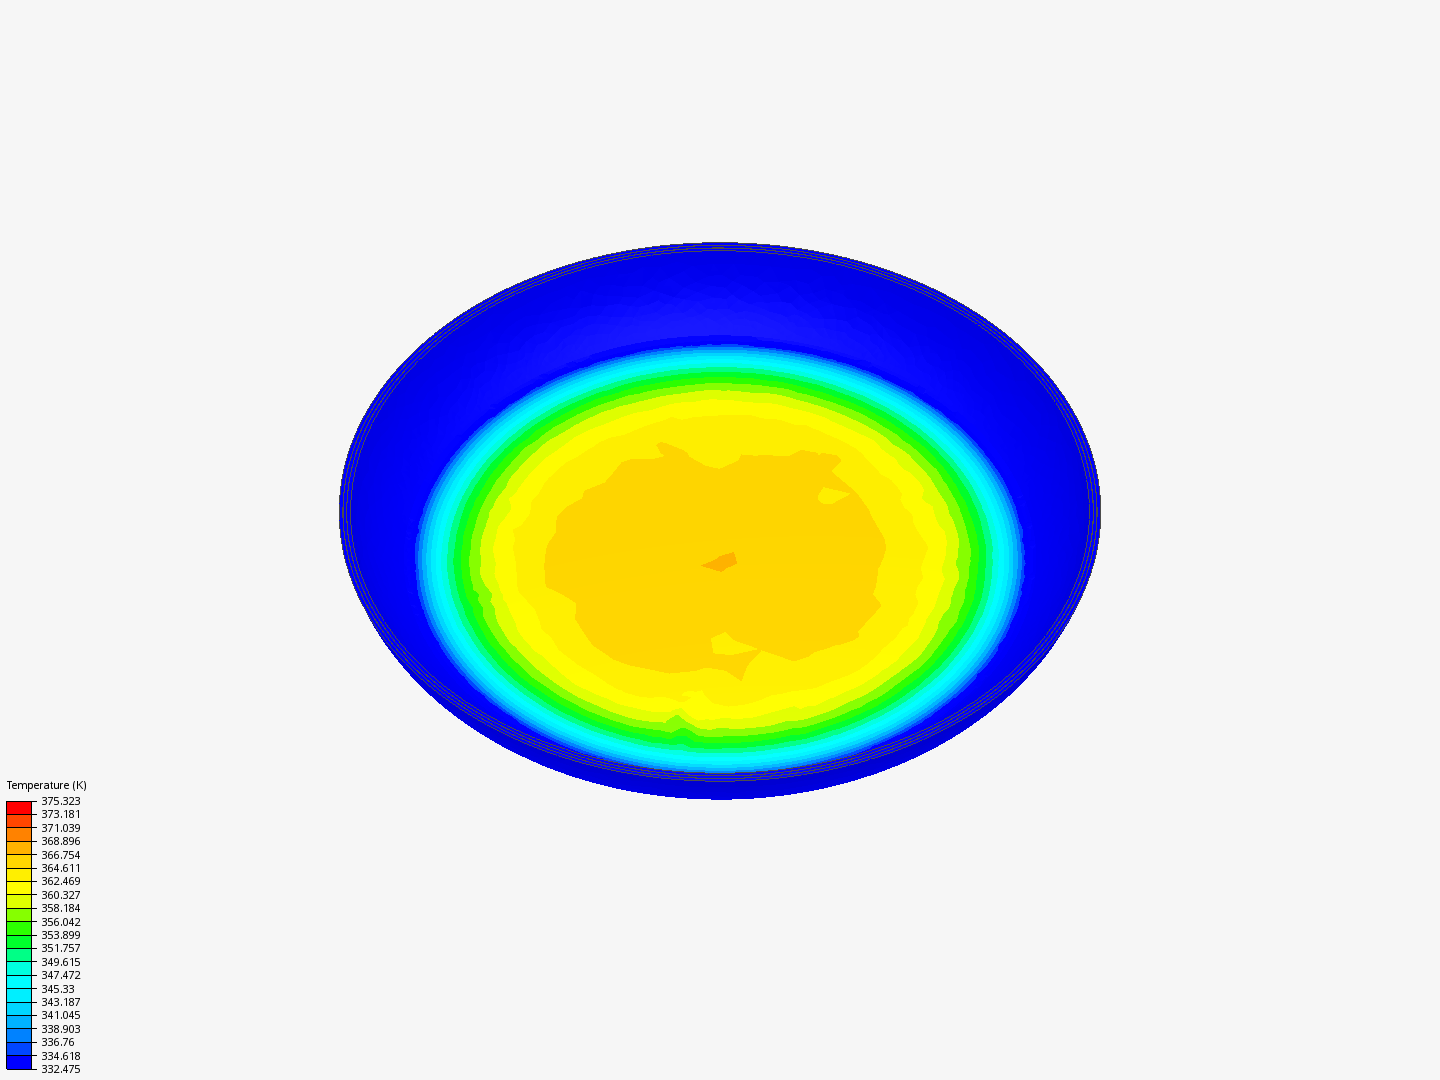 Heat Transfer Through a Pan image